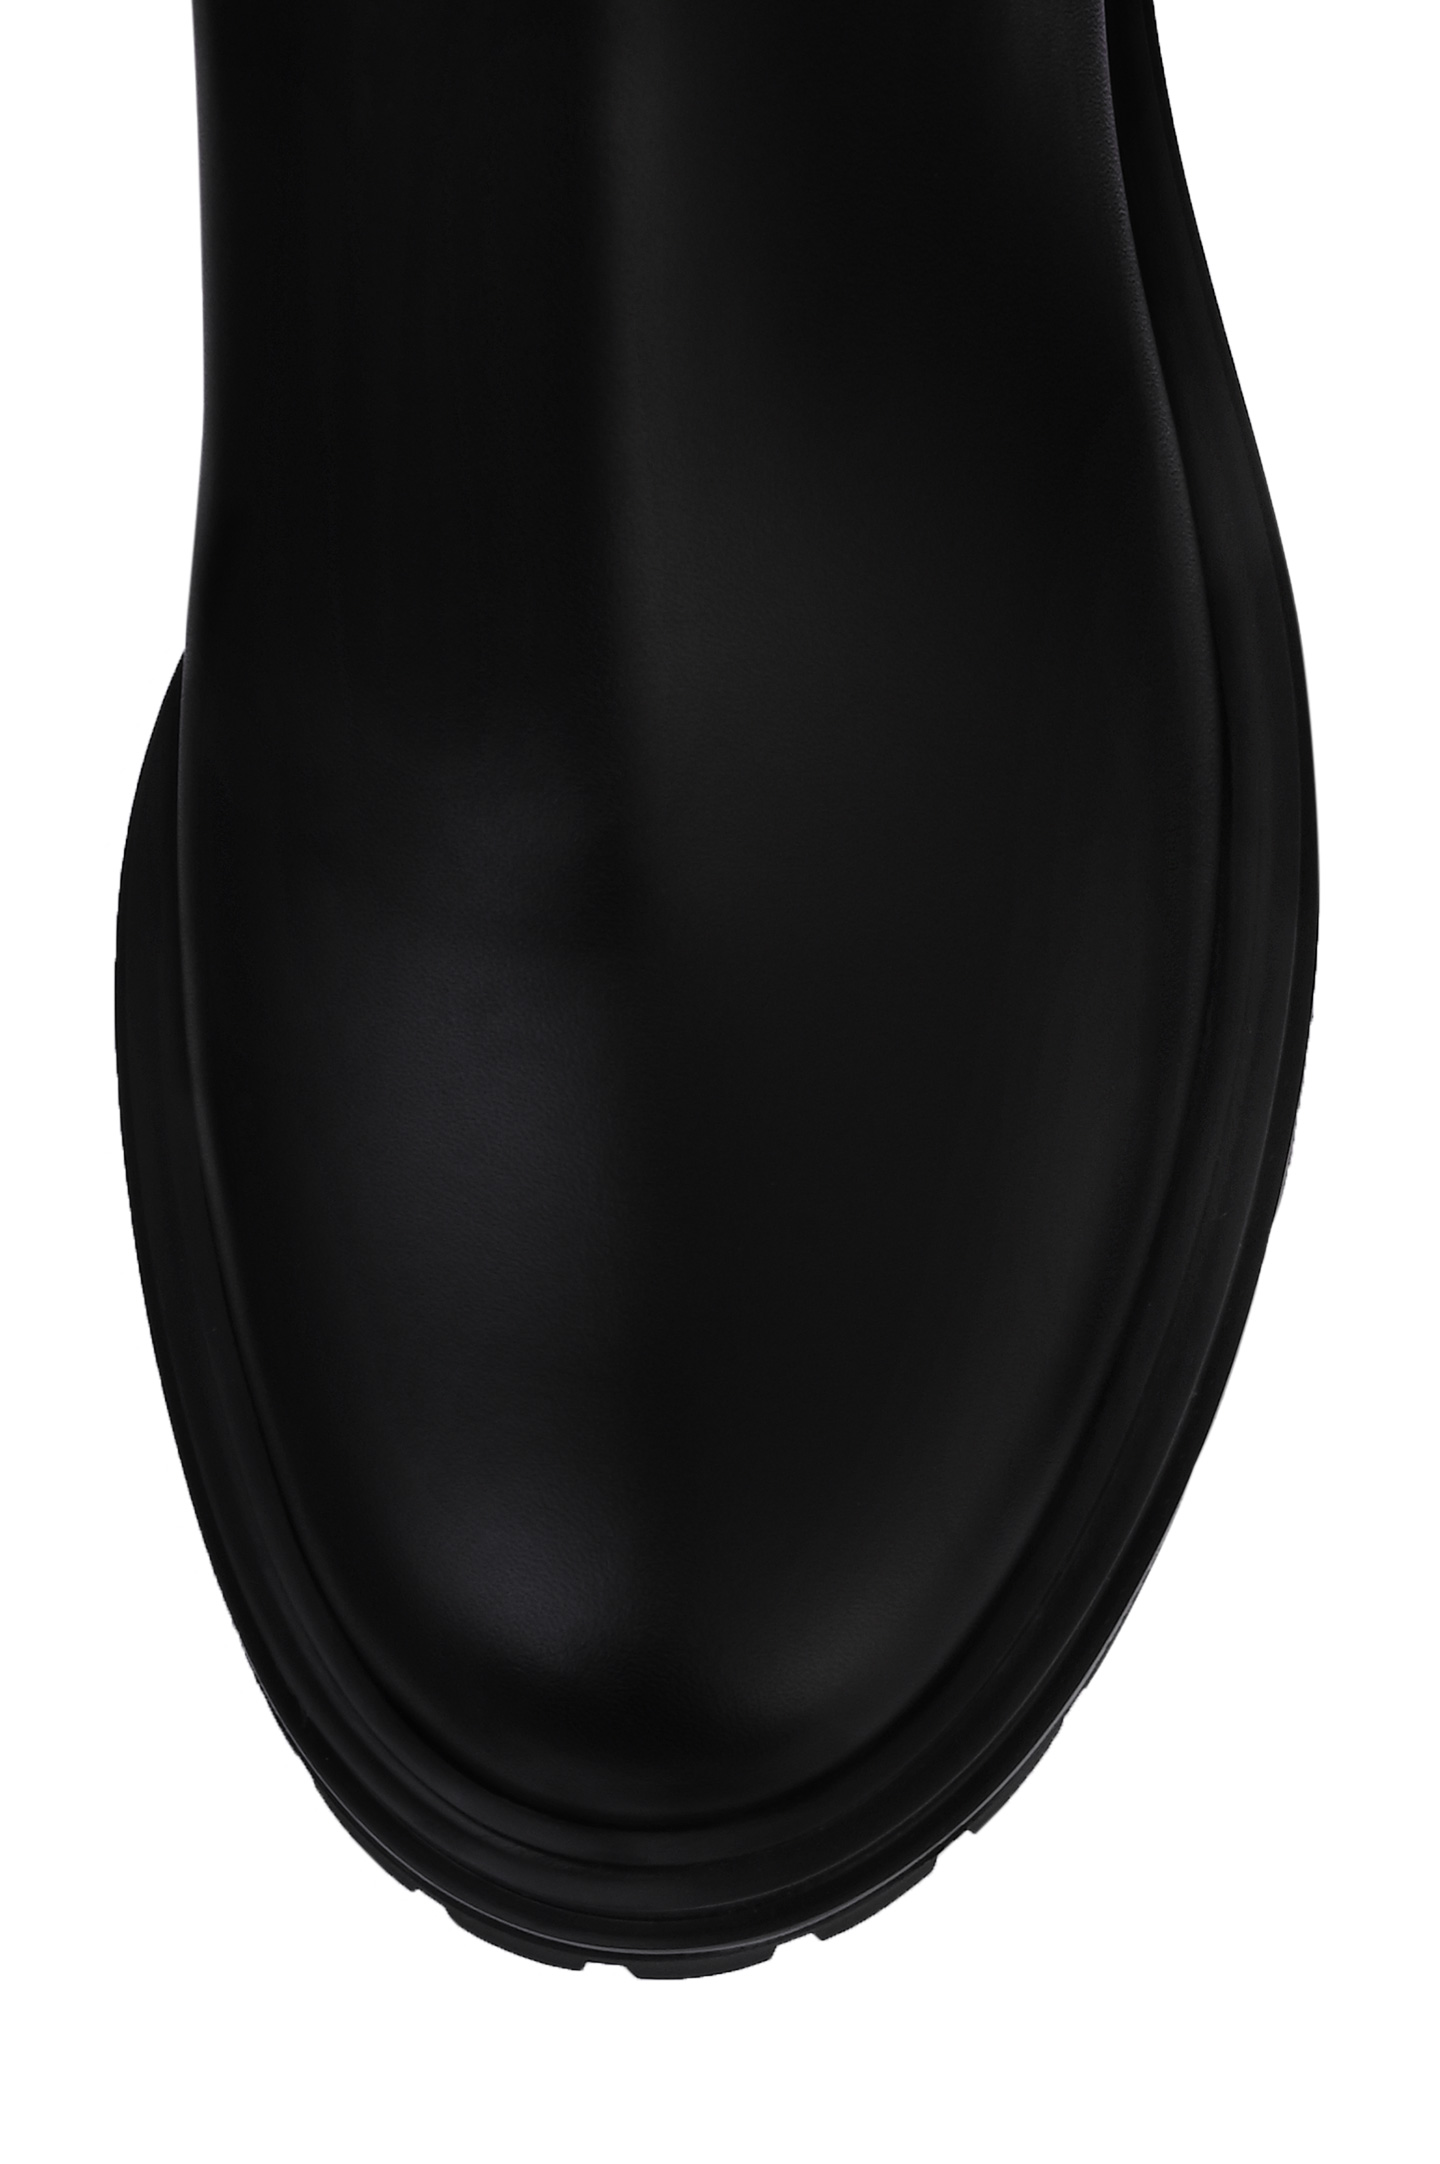 Ботинки GIANVITO ROSSI G73462.20GOM.CLNNERO, цвет: Черный, Женский